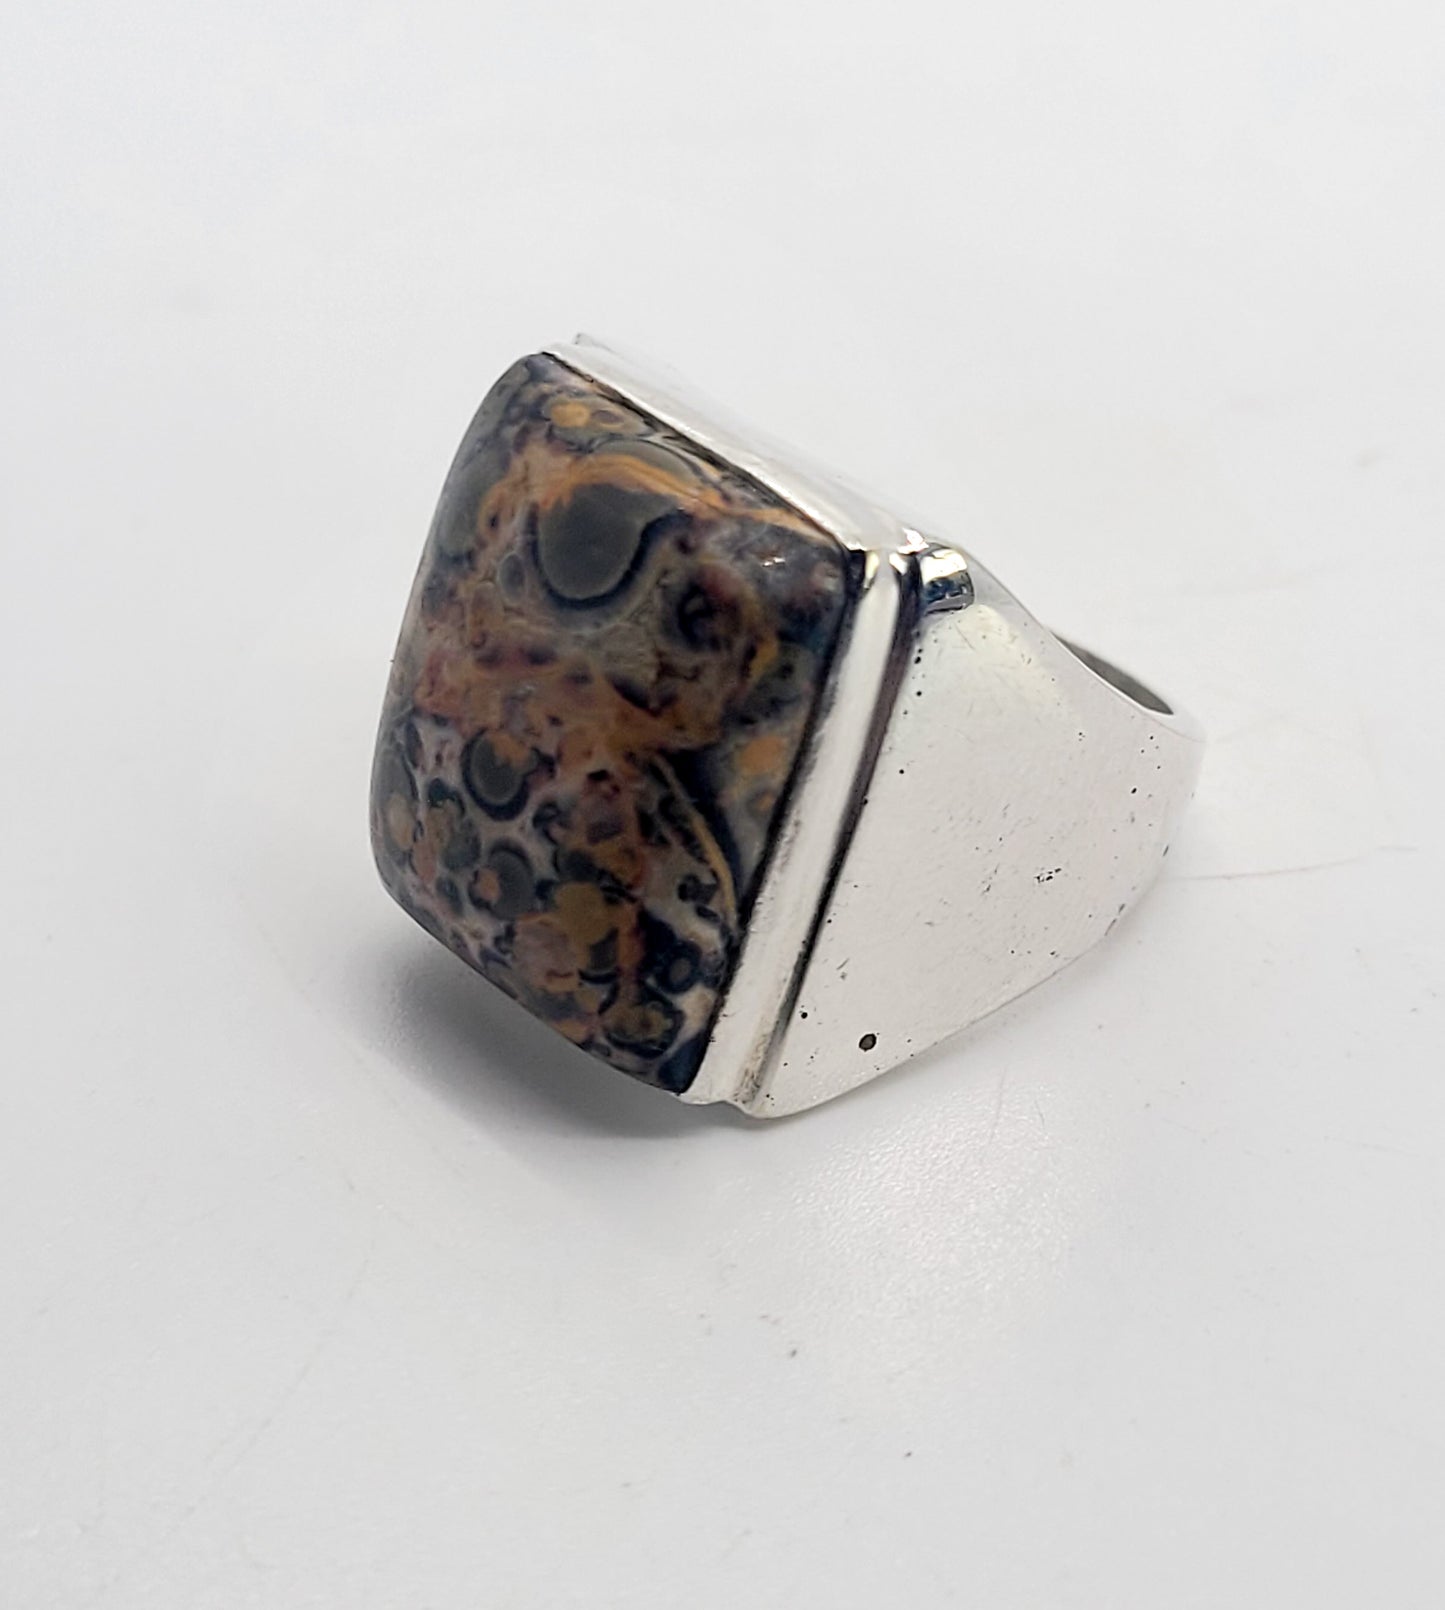 Leopard skin jasper large heavy vintage sterling silver ring size 9